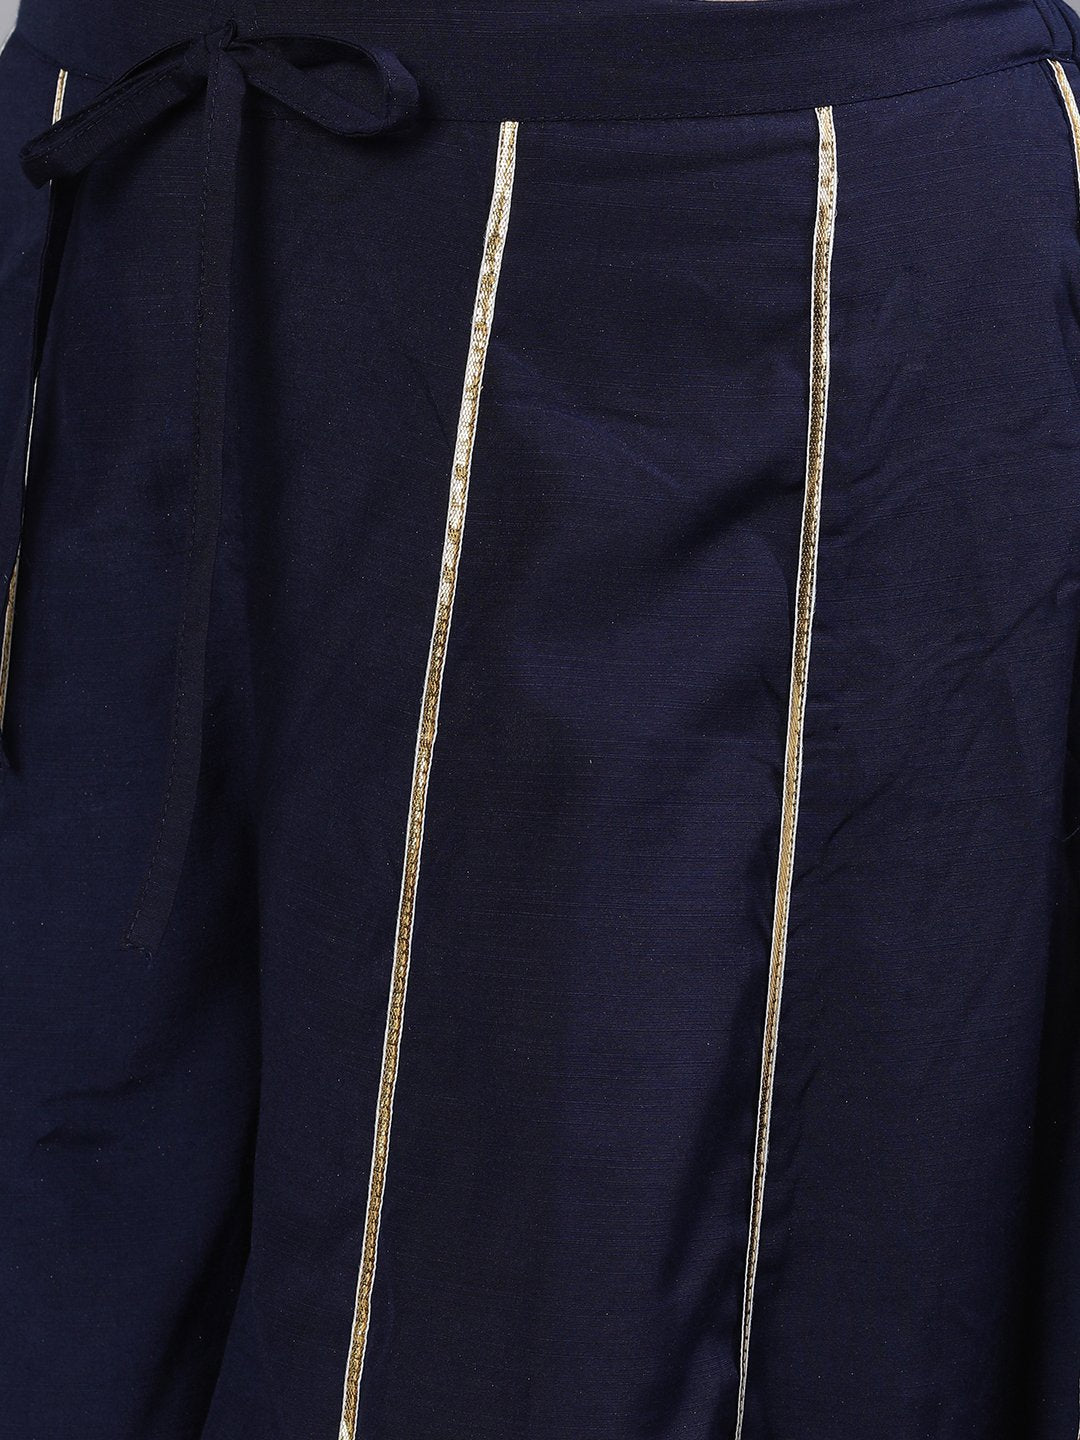 Ishin Women's Silk Navy Blue Embellished Straight Kurta Sharara Dupatta Set